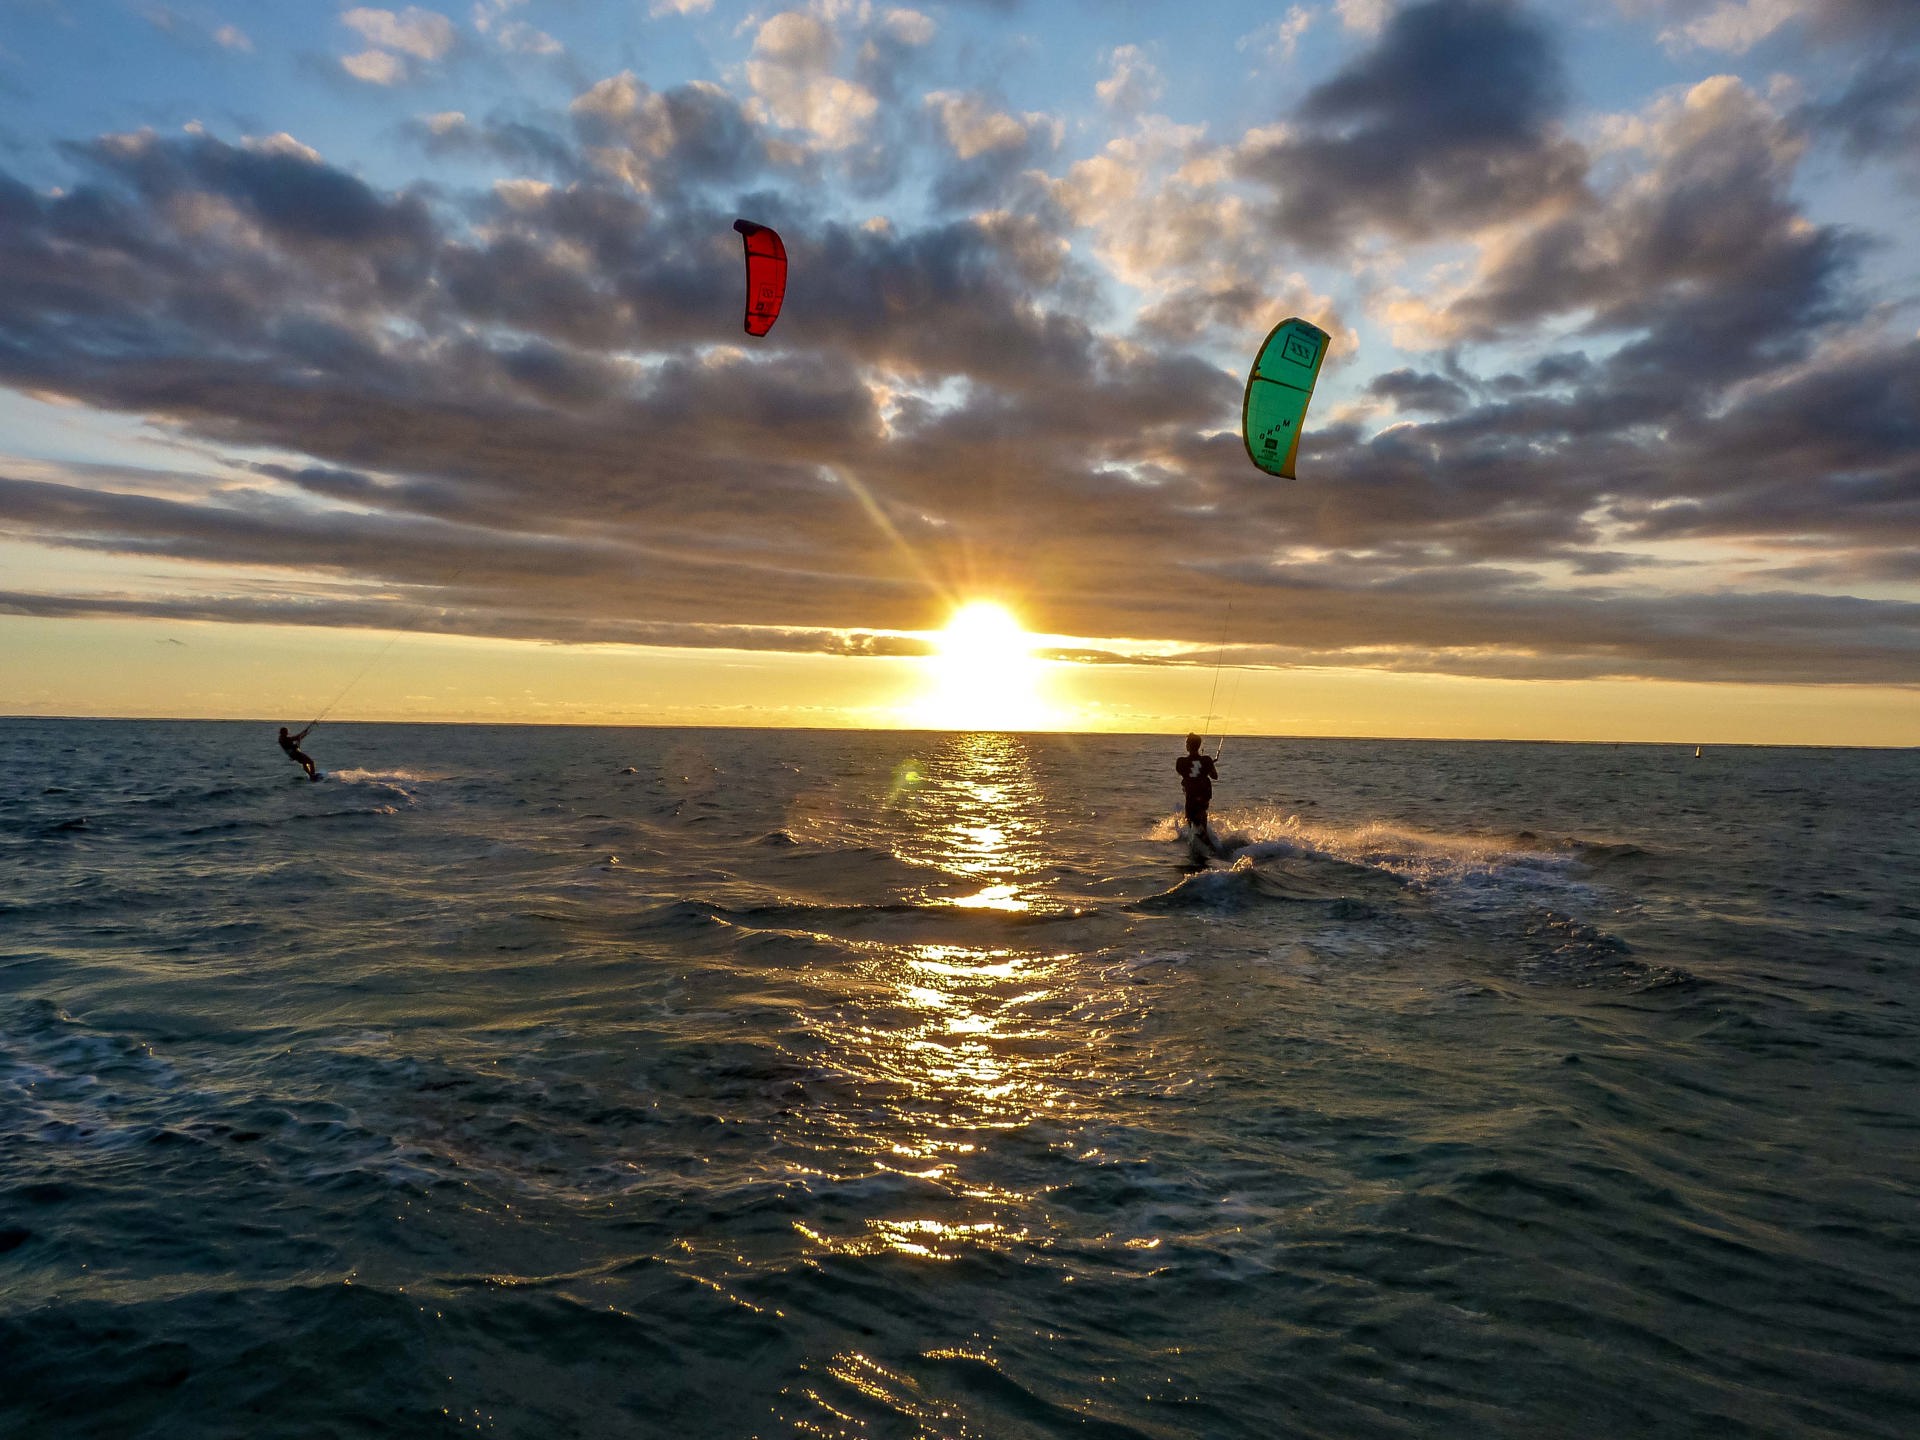 Kitesurfing in the Mauritius